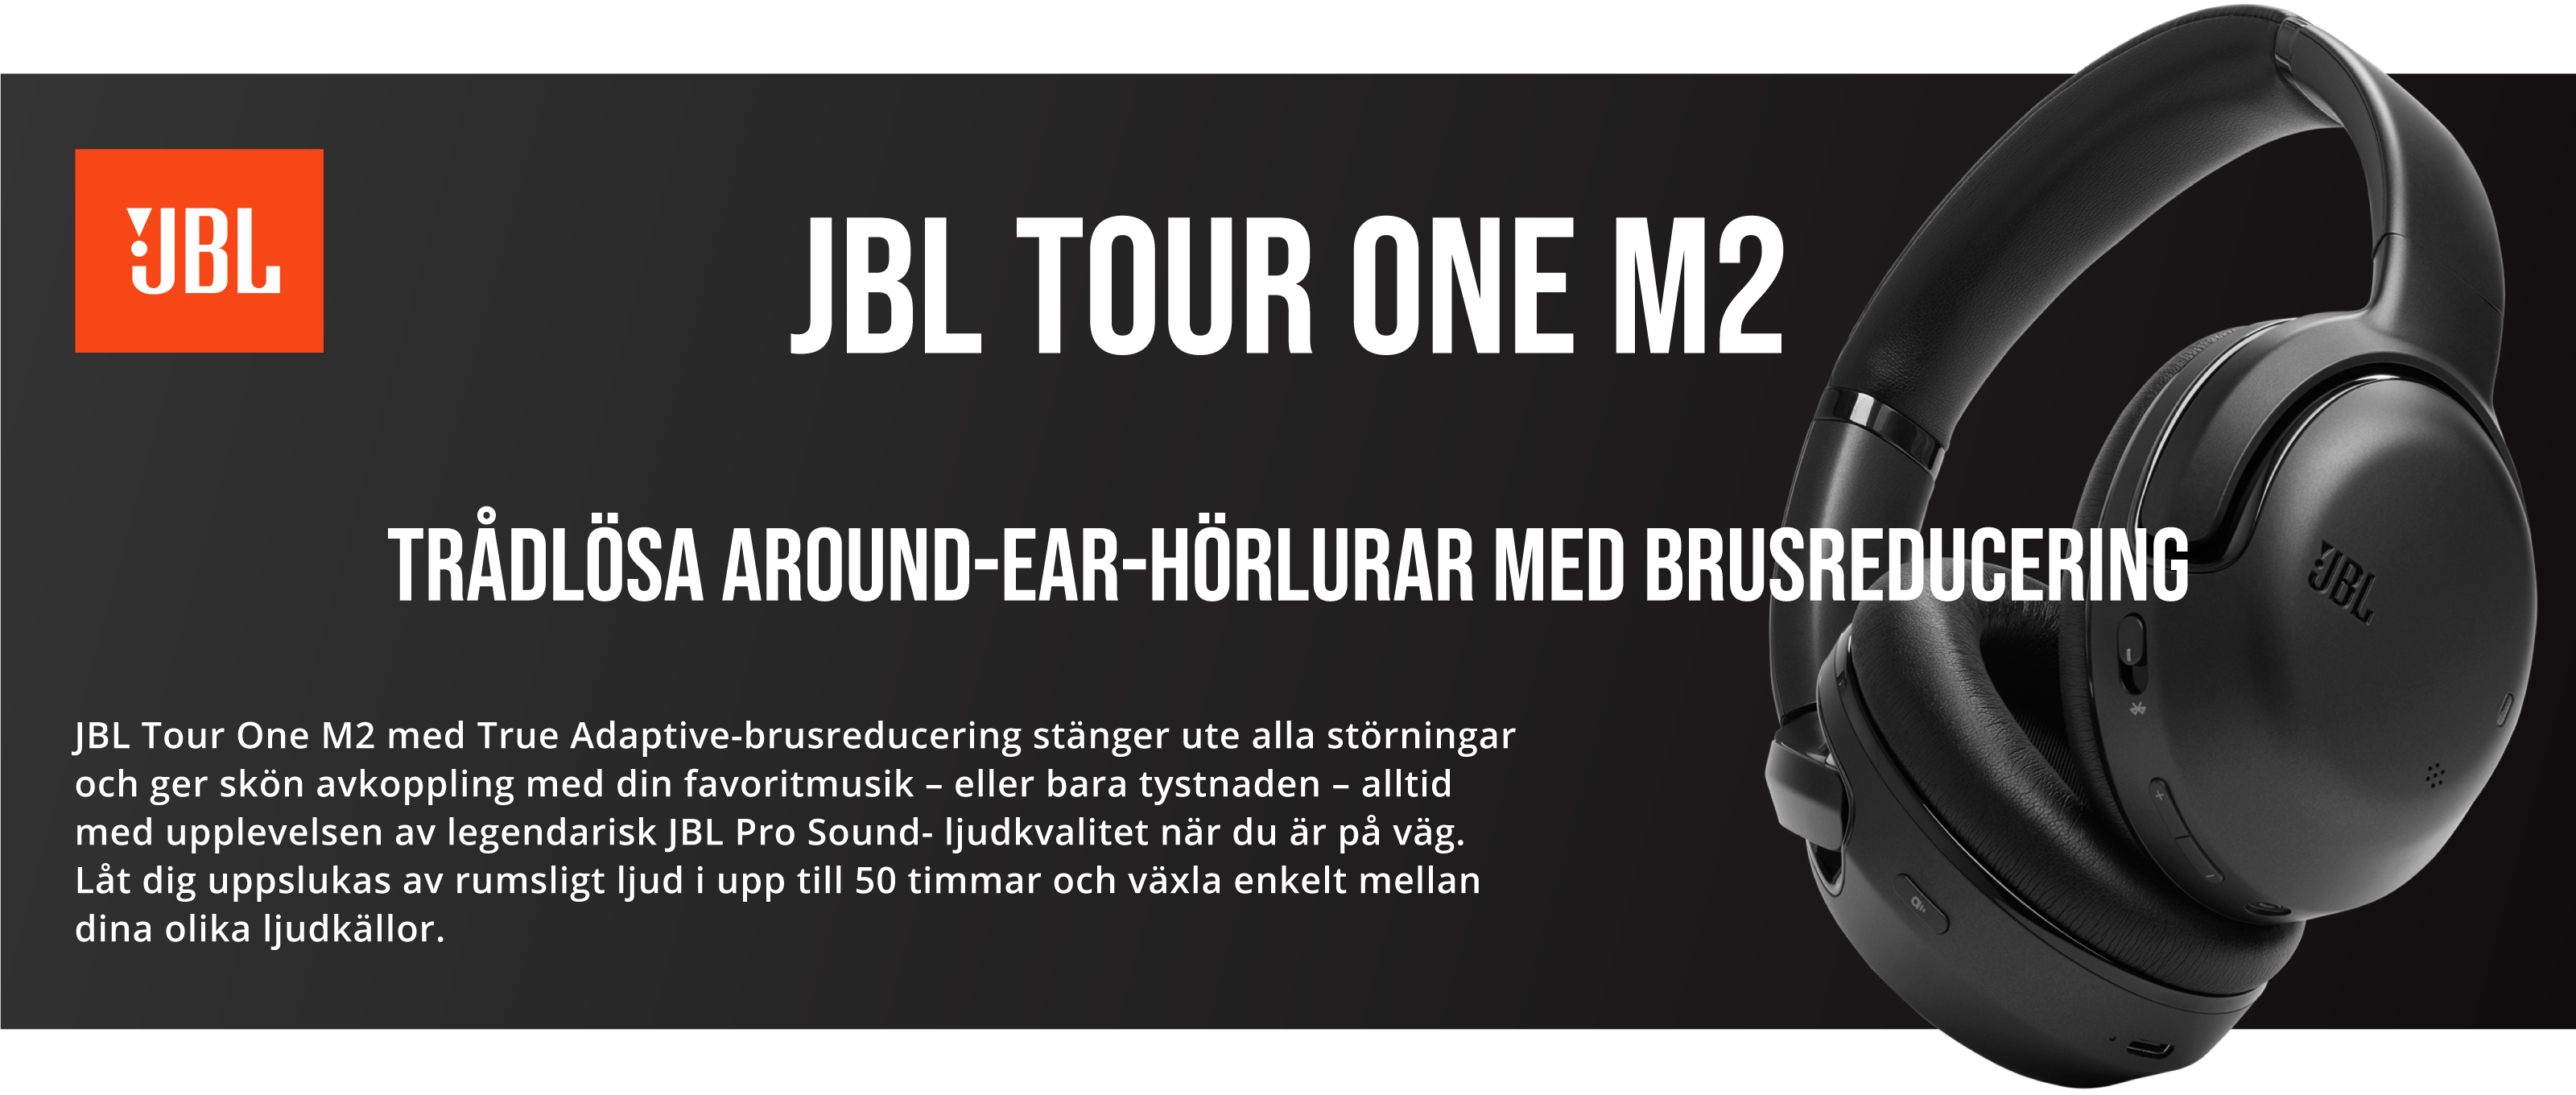 JBL Tour One MK2 trådlösa around ear-hörlurar (champagne) - Elgiganten